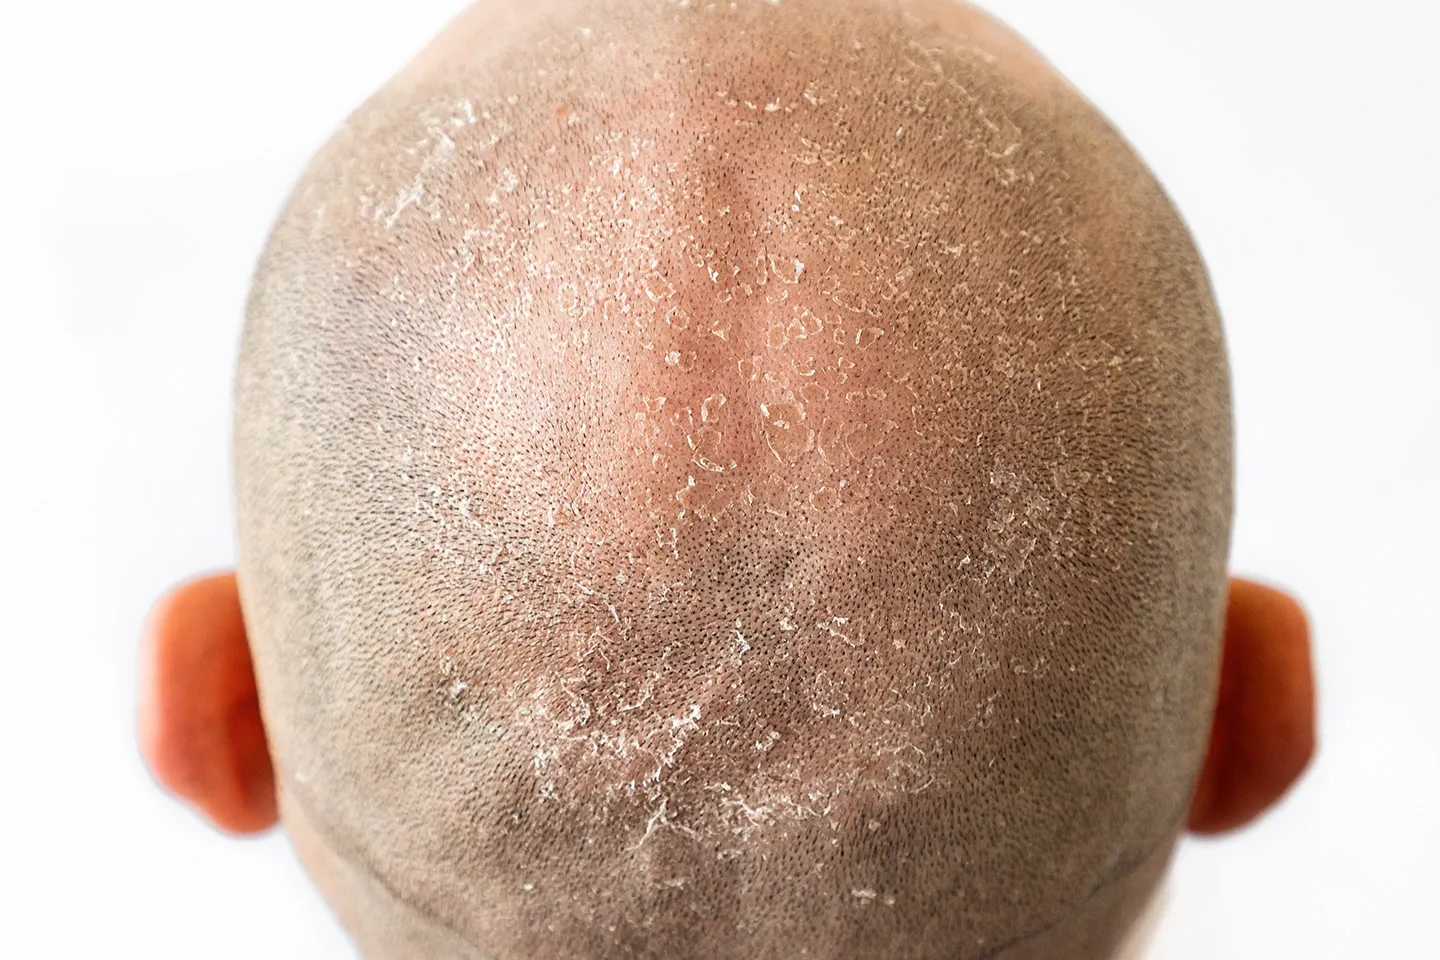 Dandruff on head which cause seborrheic dermatitis